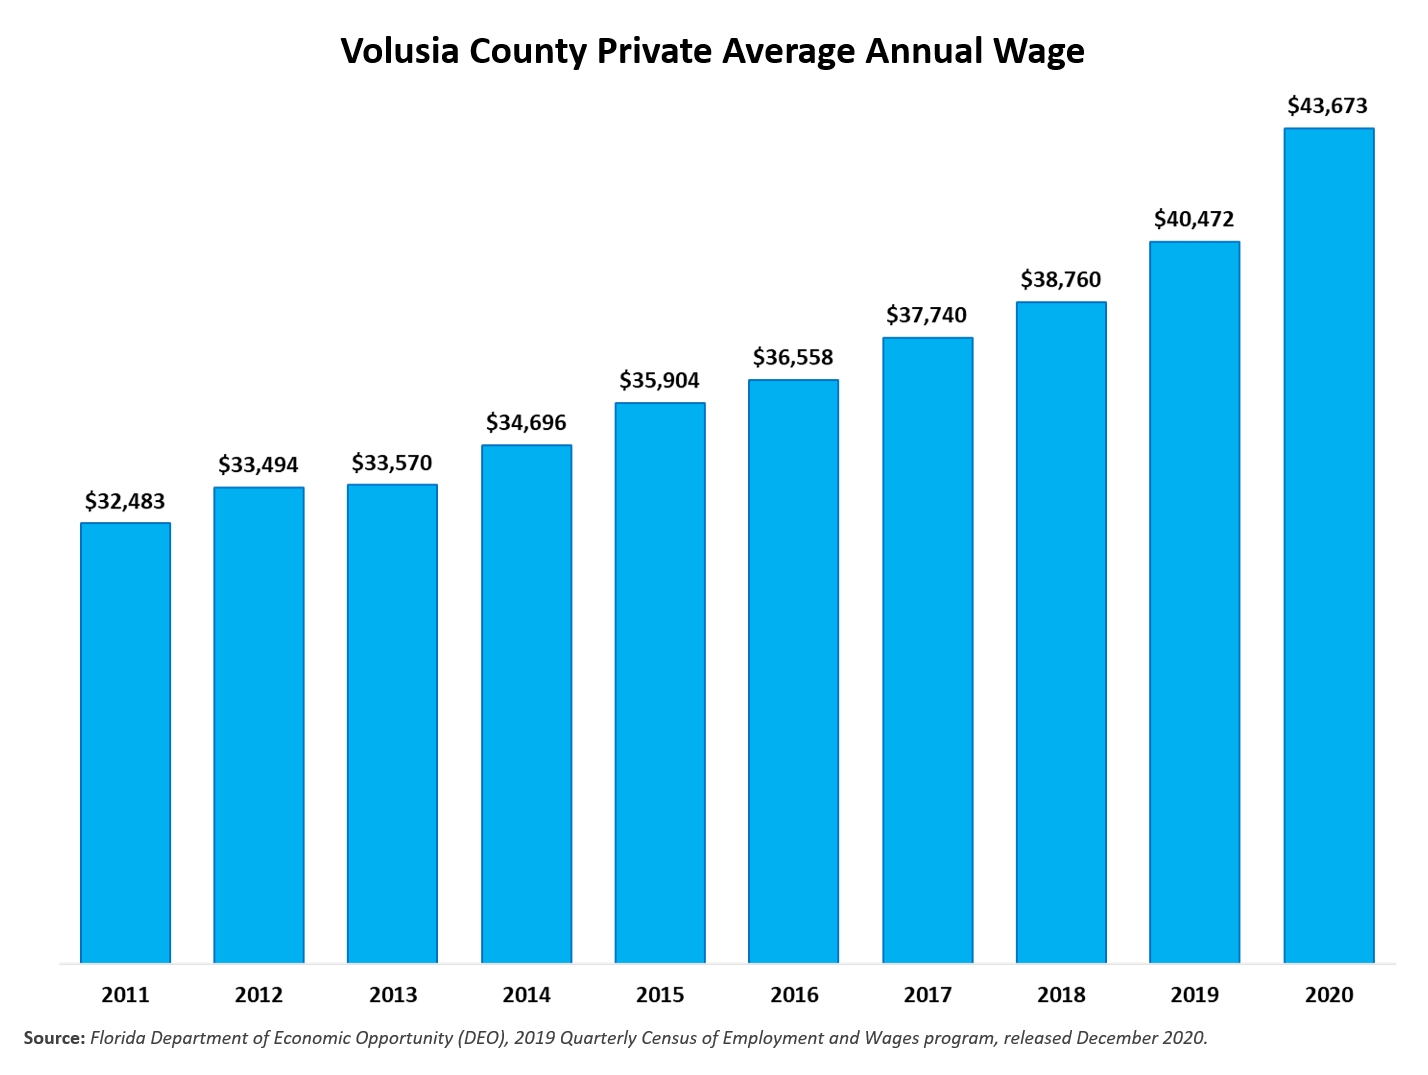 Volusia County Private Average Annual Wage trend chart